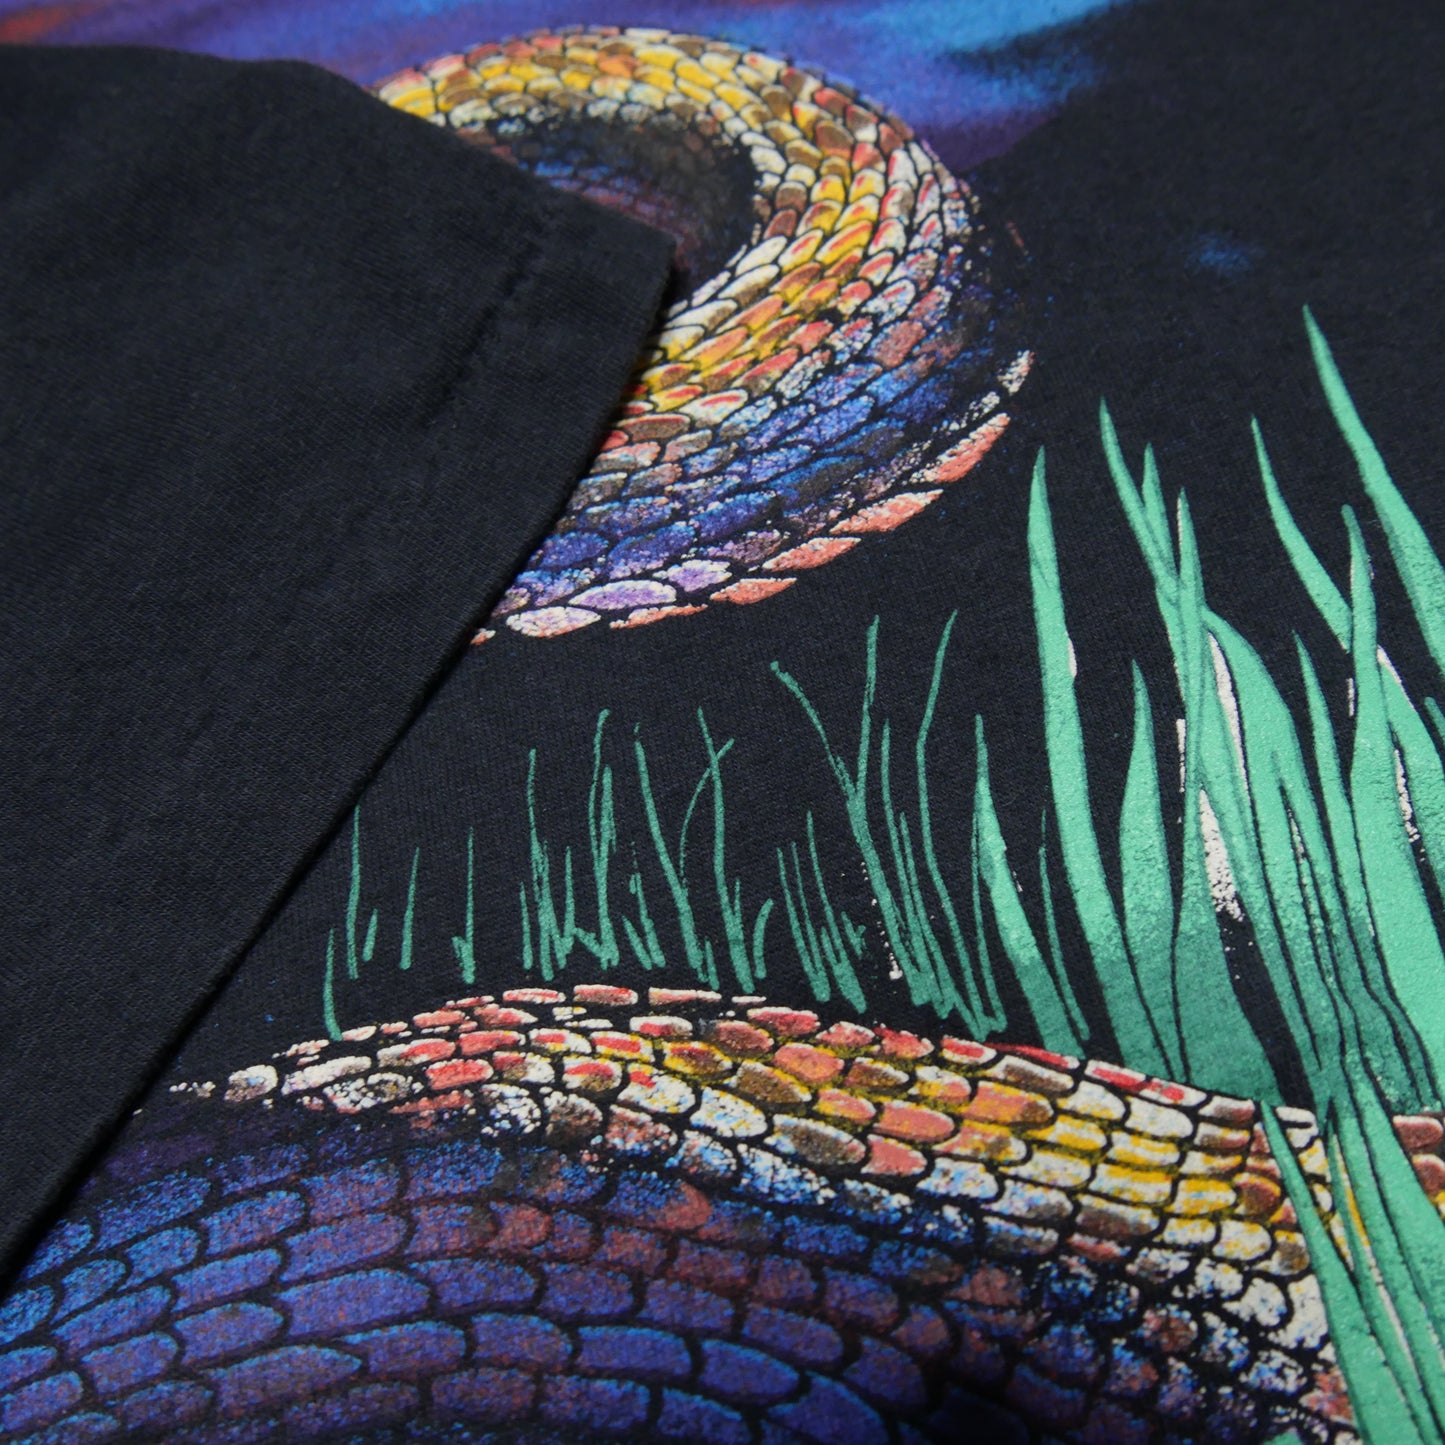 Rattle Snake Wrap Around Print - Large